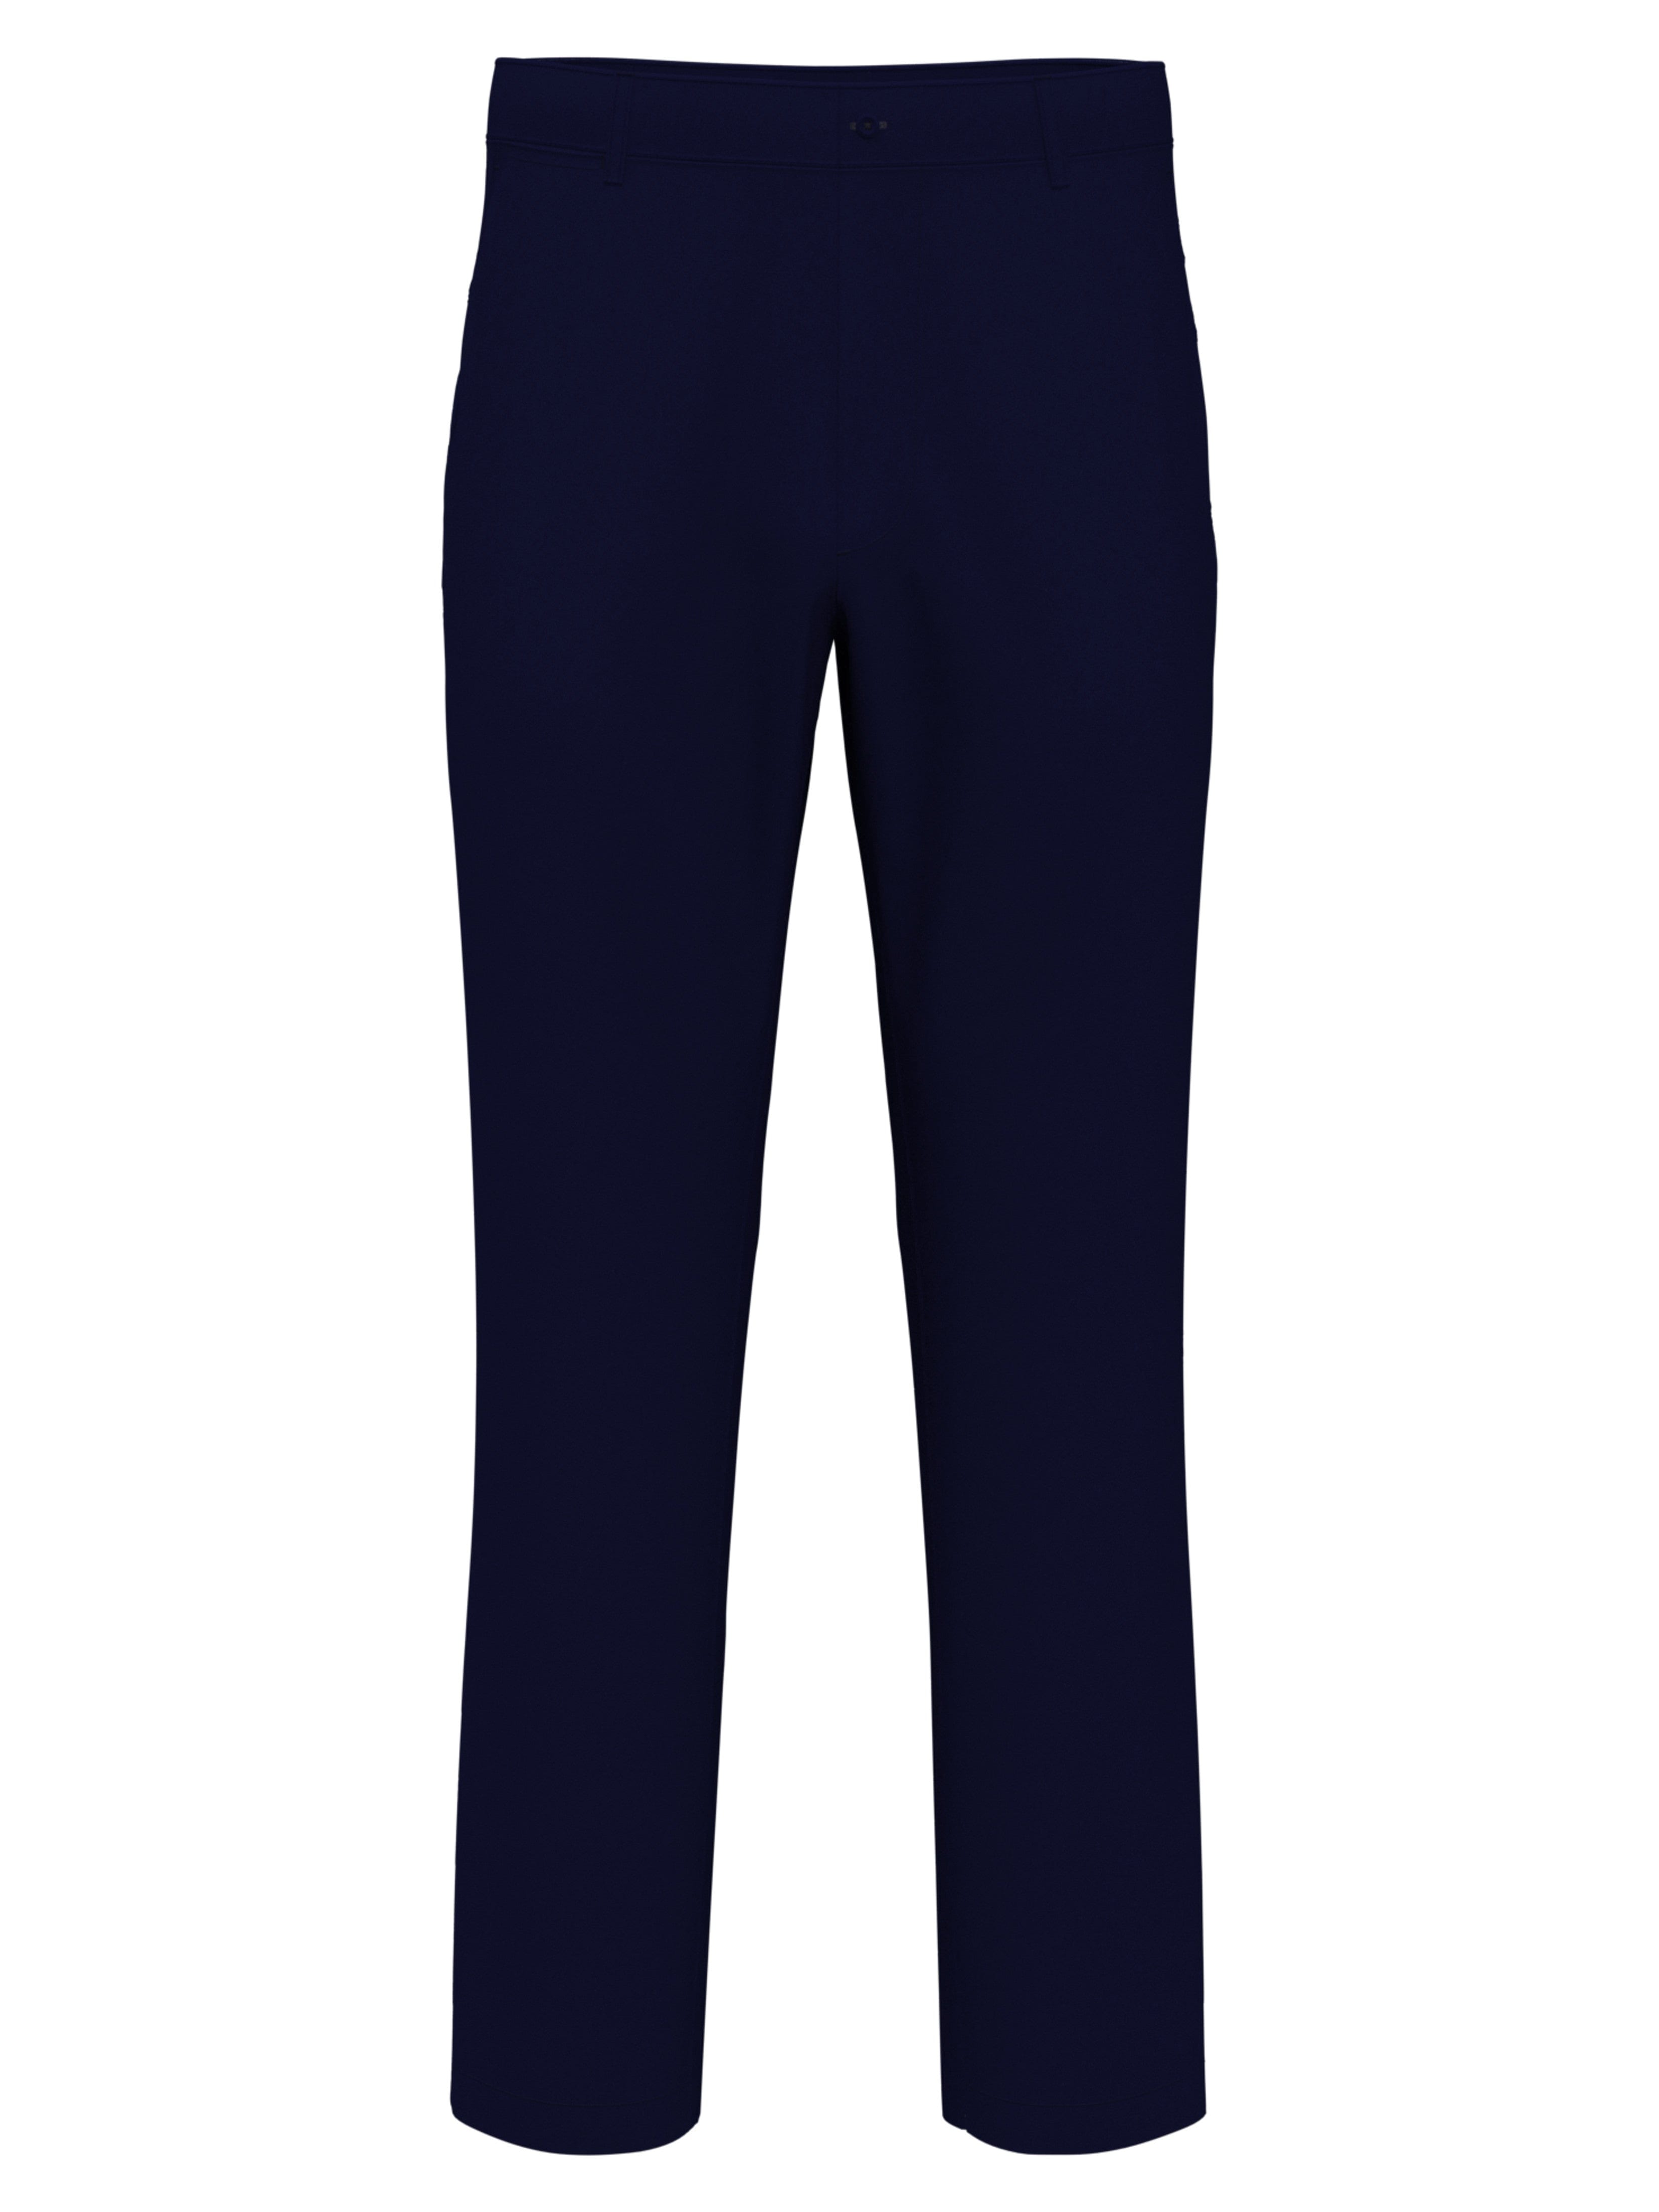 PGA TOUR Apparel Boys Flat Front Solid Golf Pants, Size Large, Dark Navy Blue, Polyester/Elastane | Golf Apparel Shop